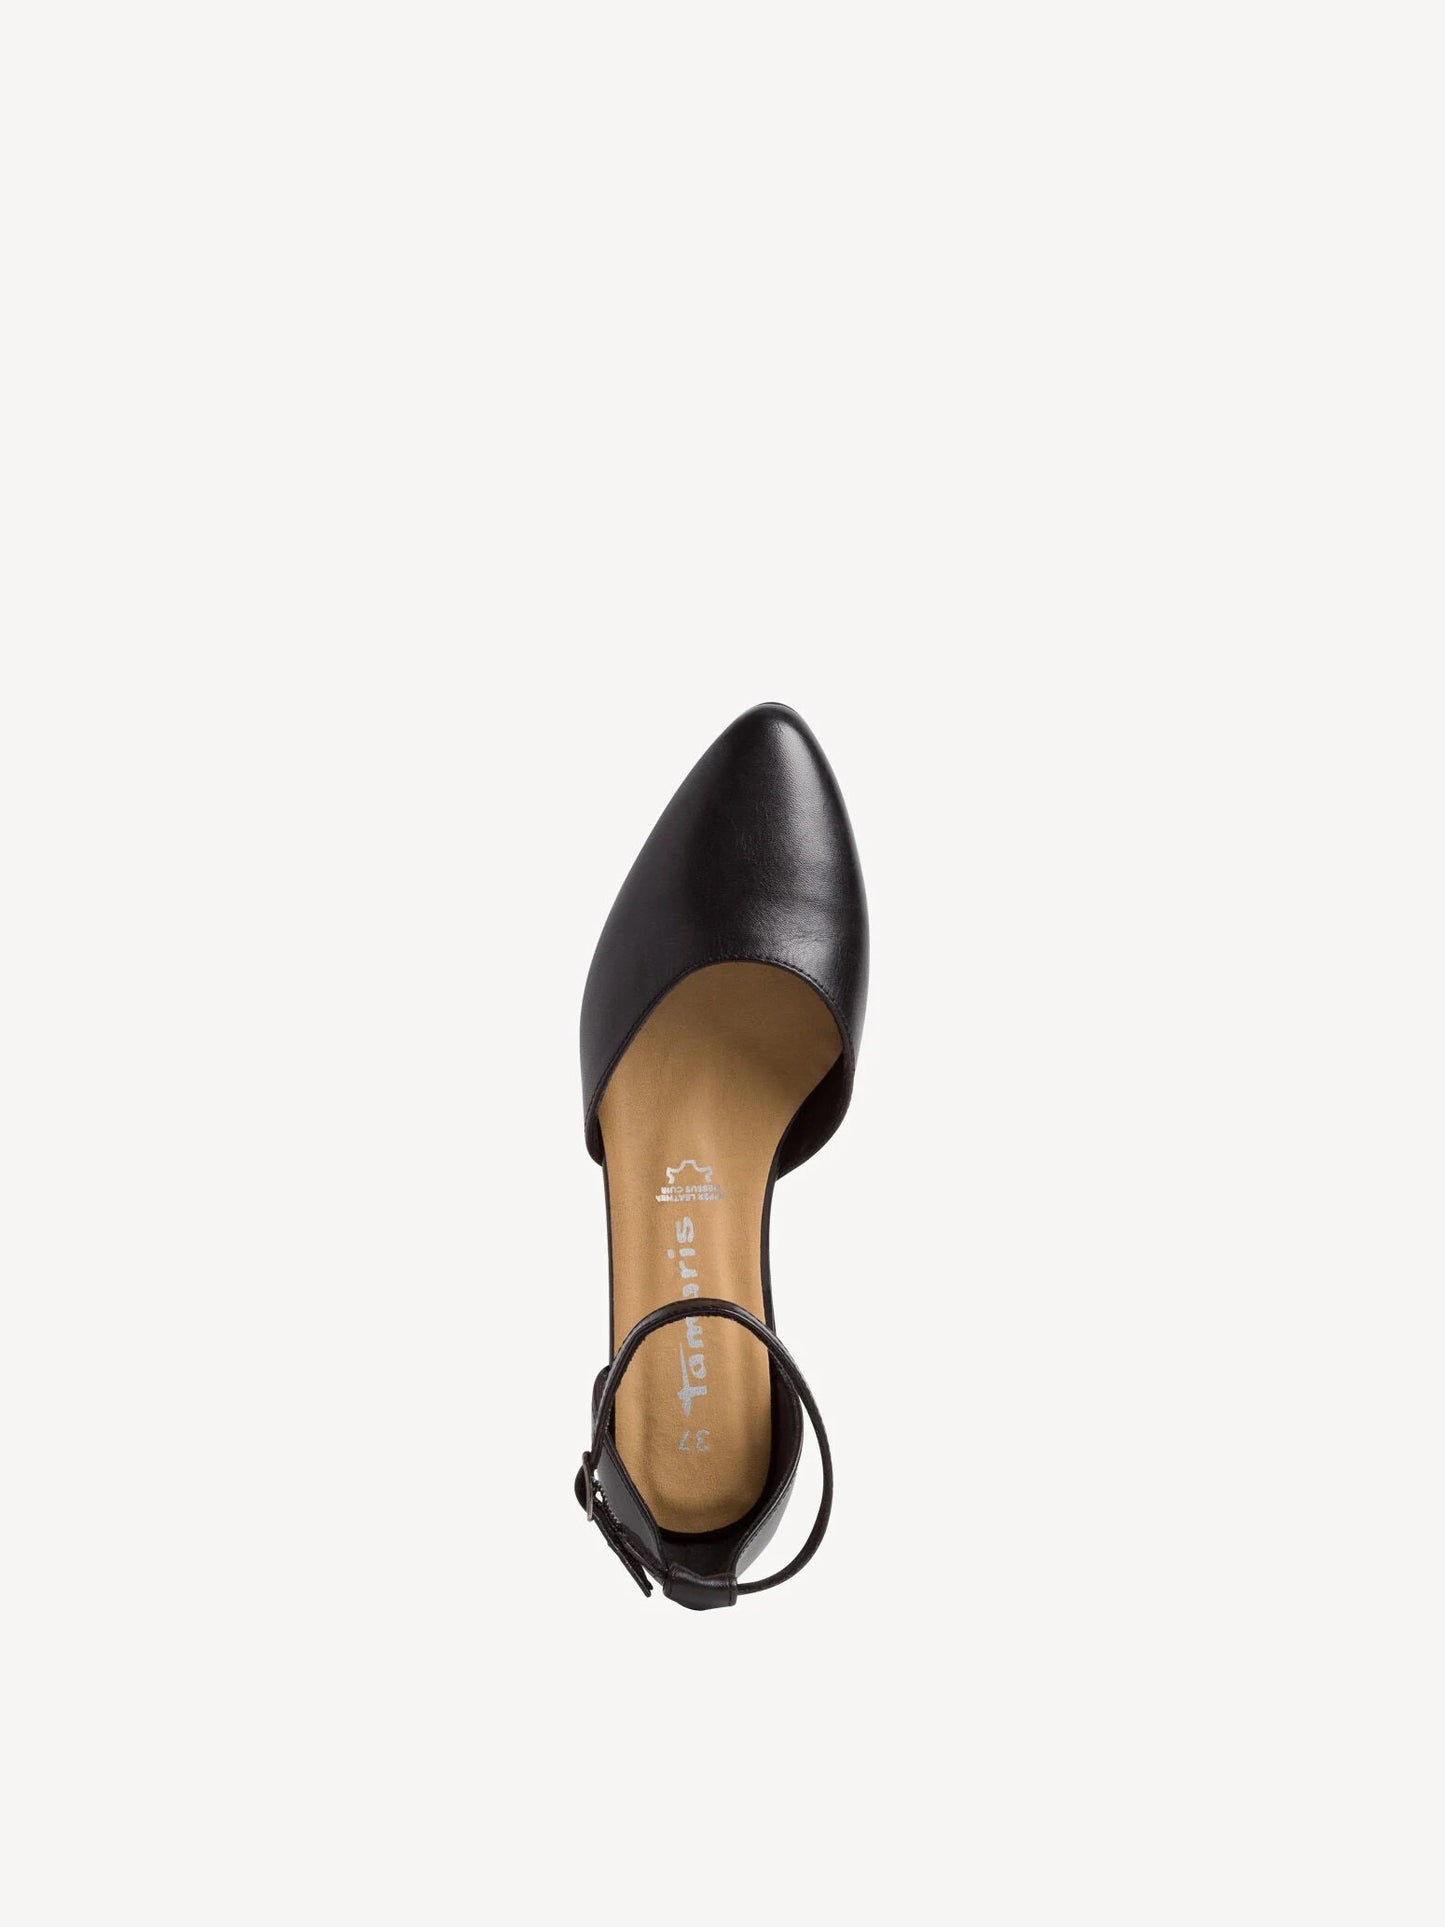 Tamaris Women's 1-24231-26 Leather Ballerina Shoes Black